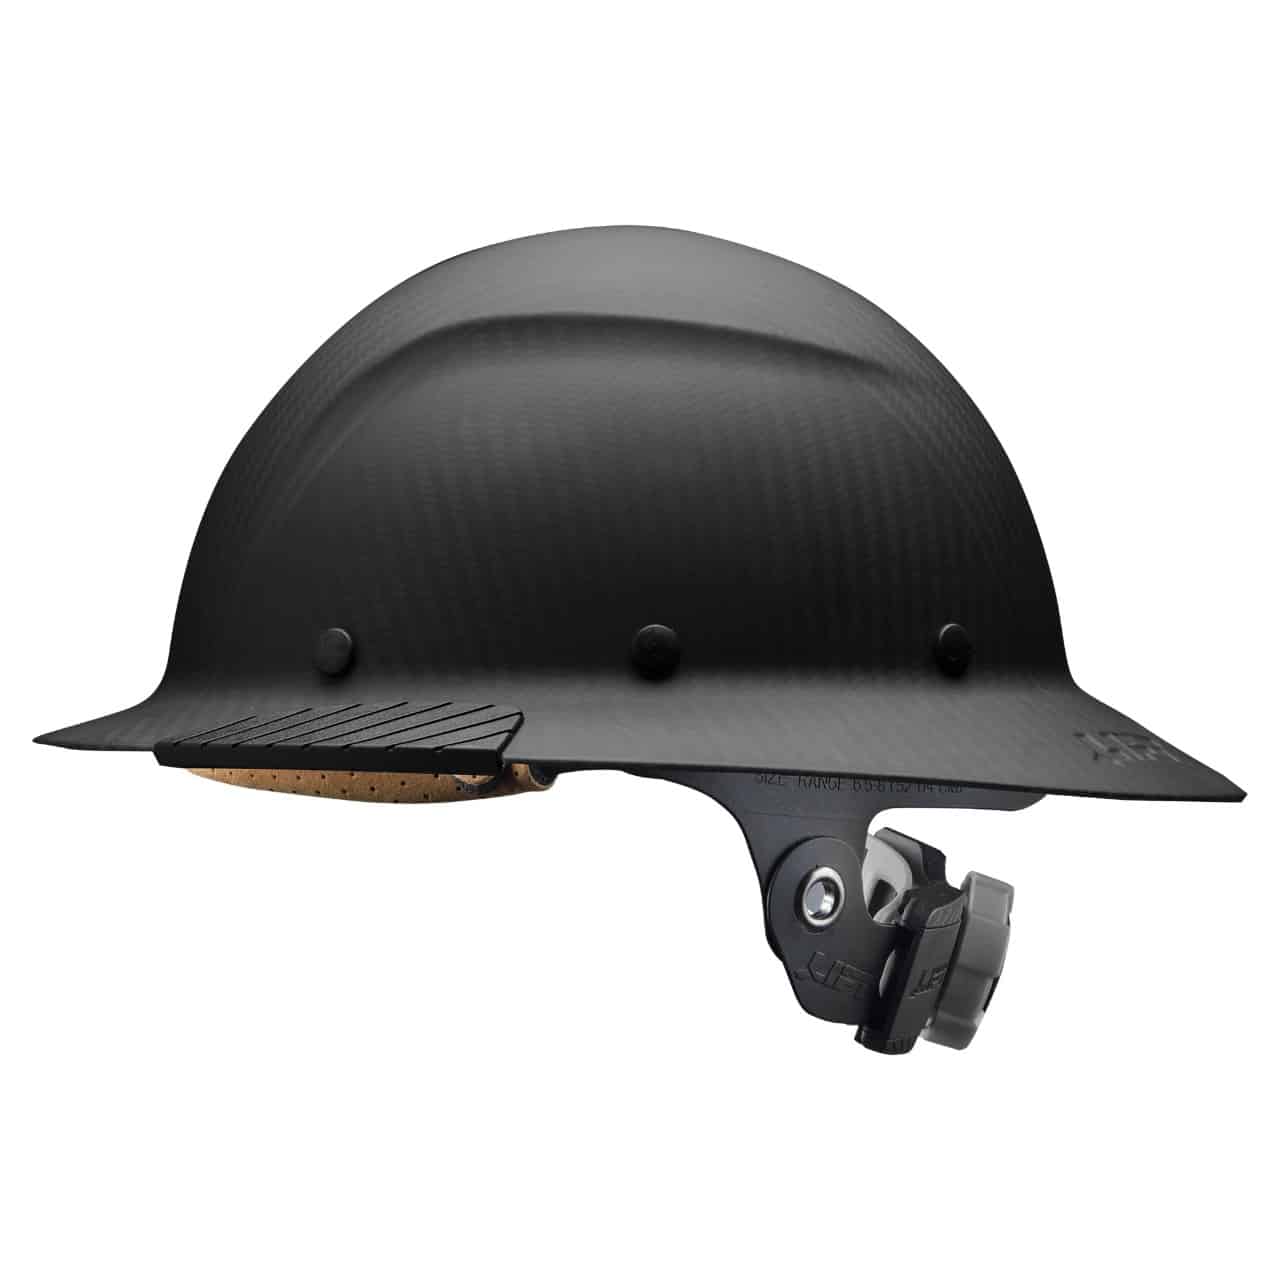 LIFT Hard Hats - Superior Comfort & Impact Protection - Full